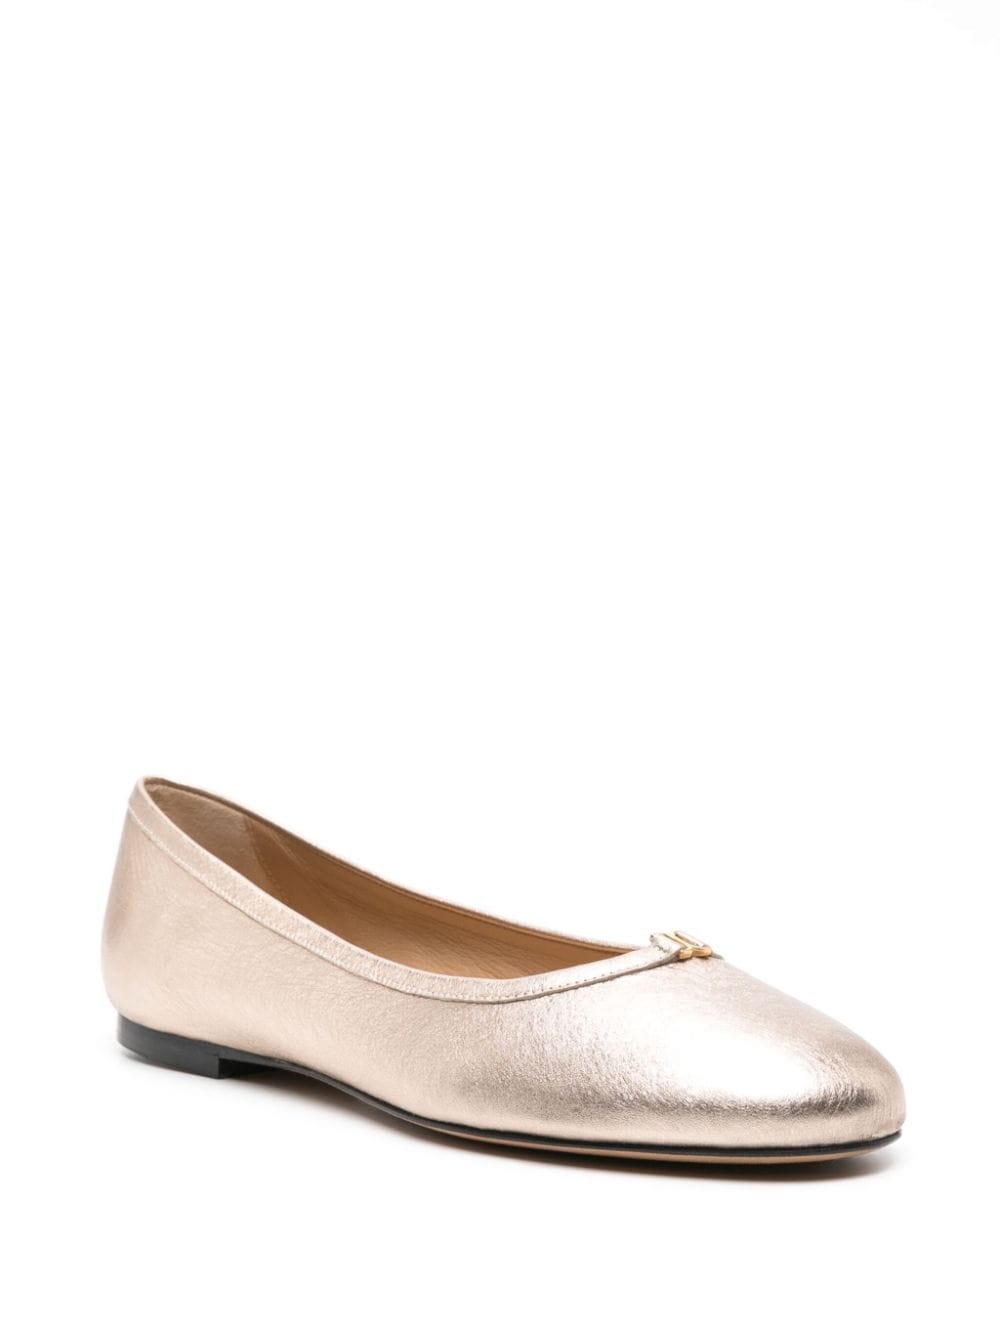 Image 2 of Chloé Marcie metallic ballerina shoes